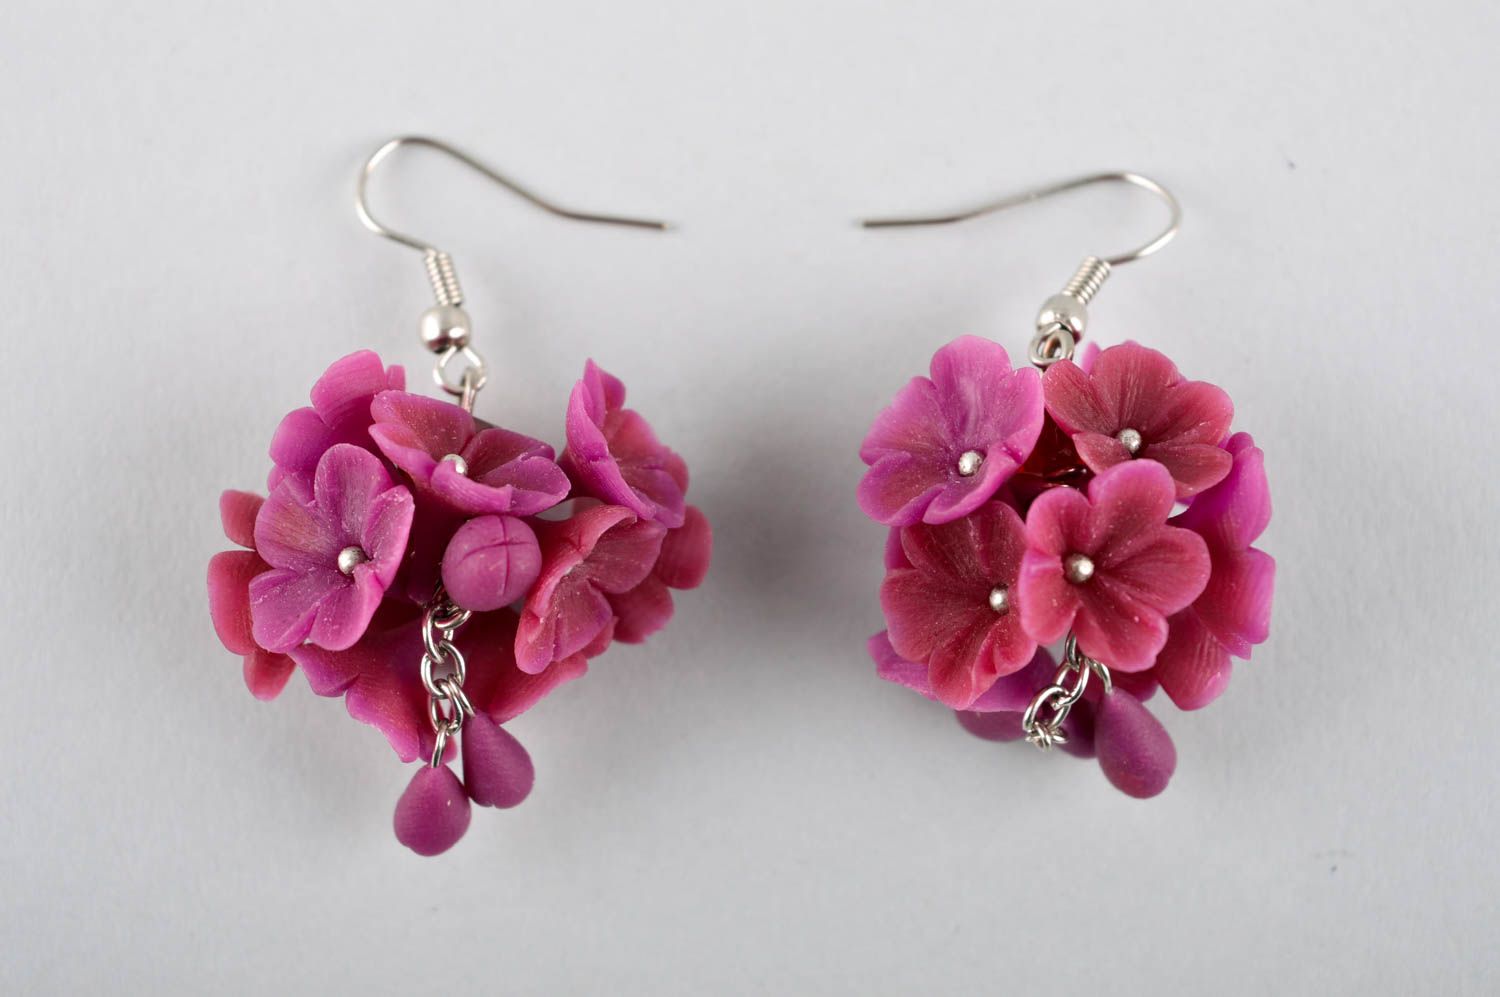 Flower earrings handmade plastic earrings polymer clay accessories for women photo 3